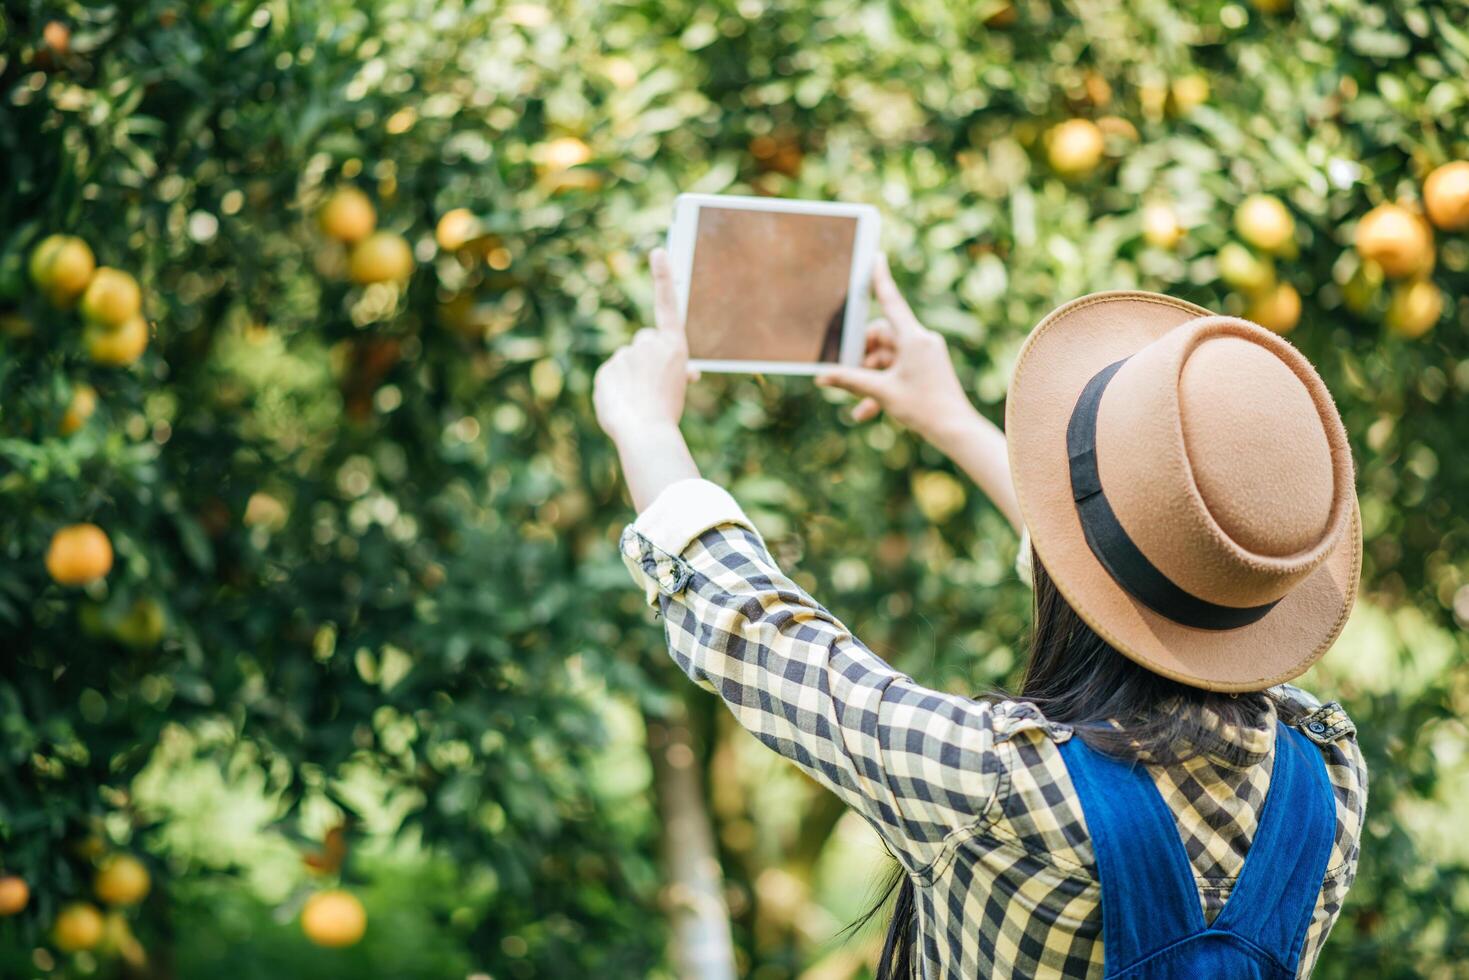 Woman harvesting an orange plantation photo